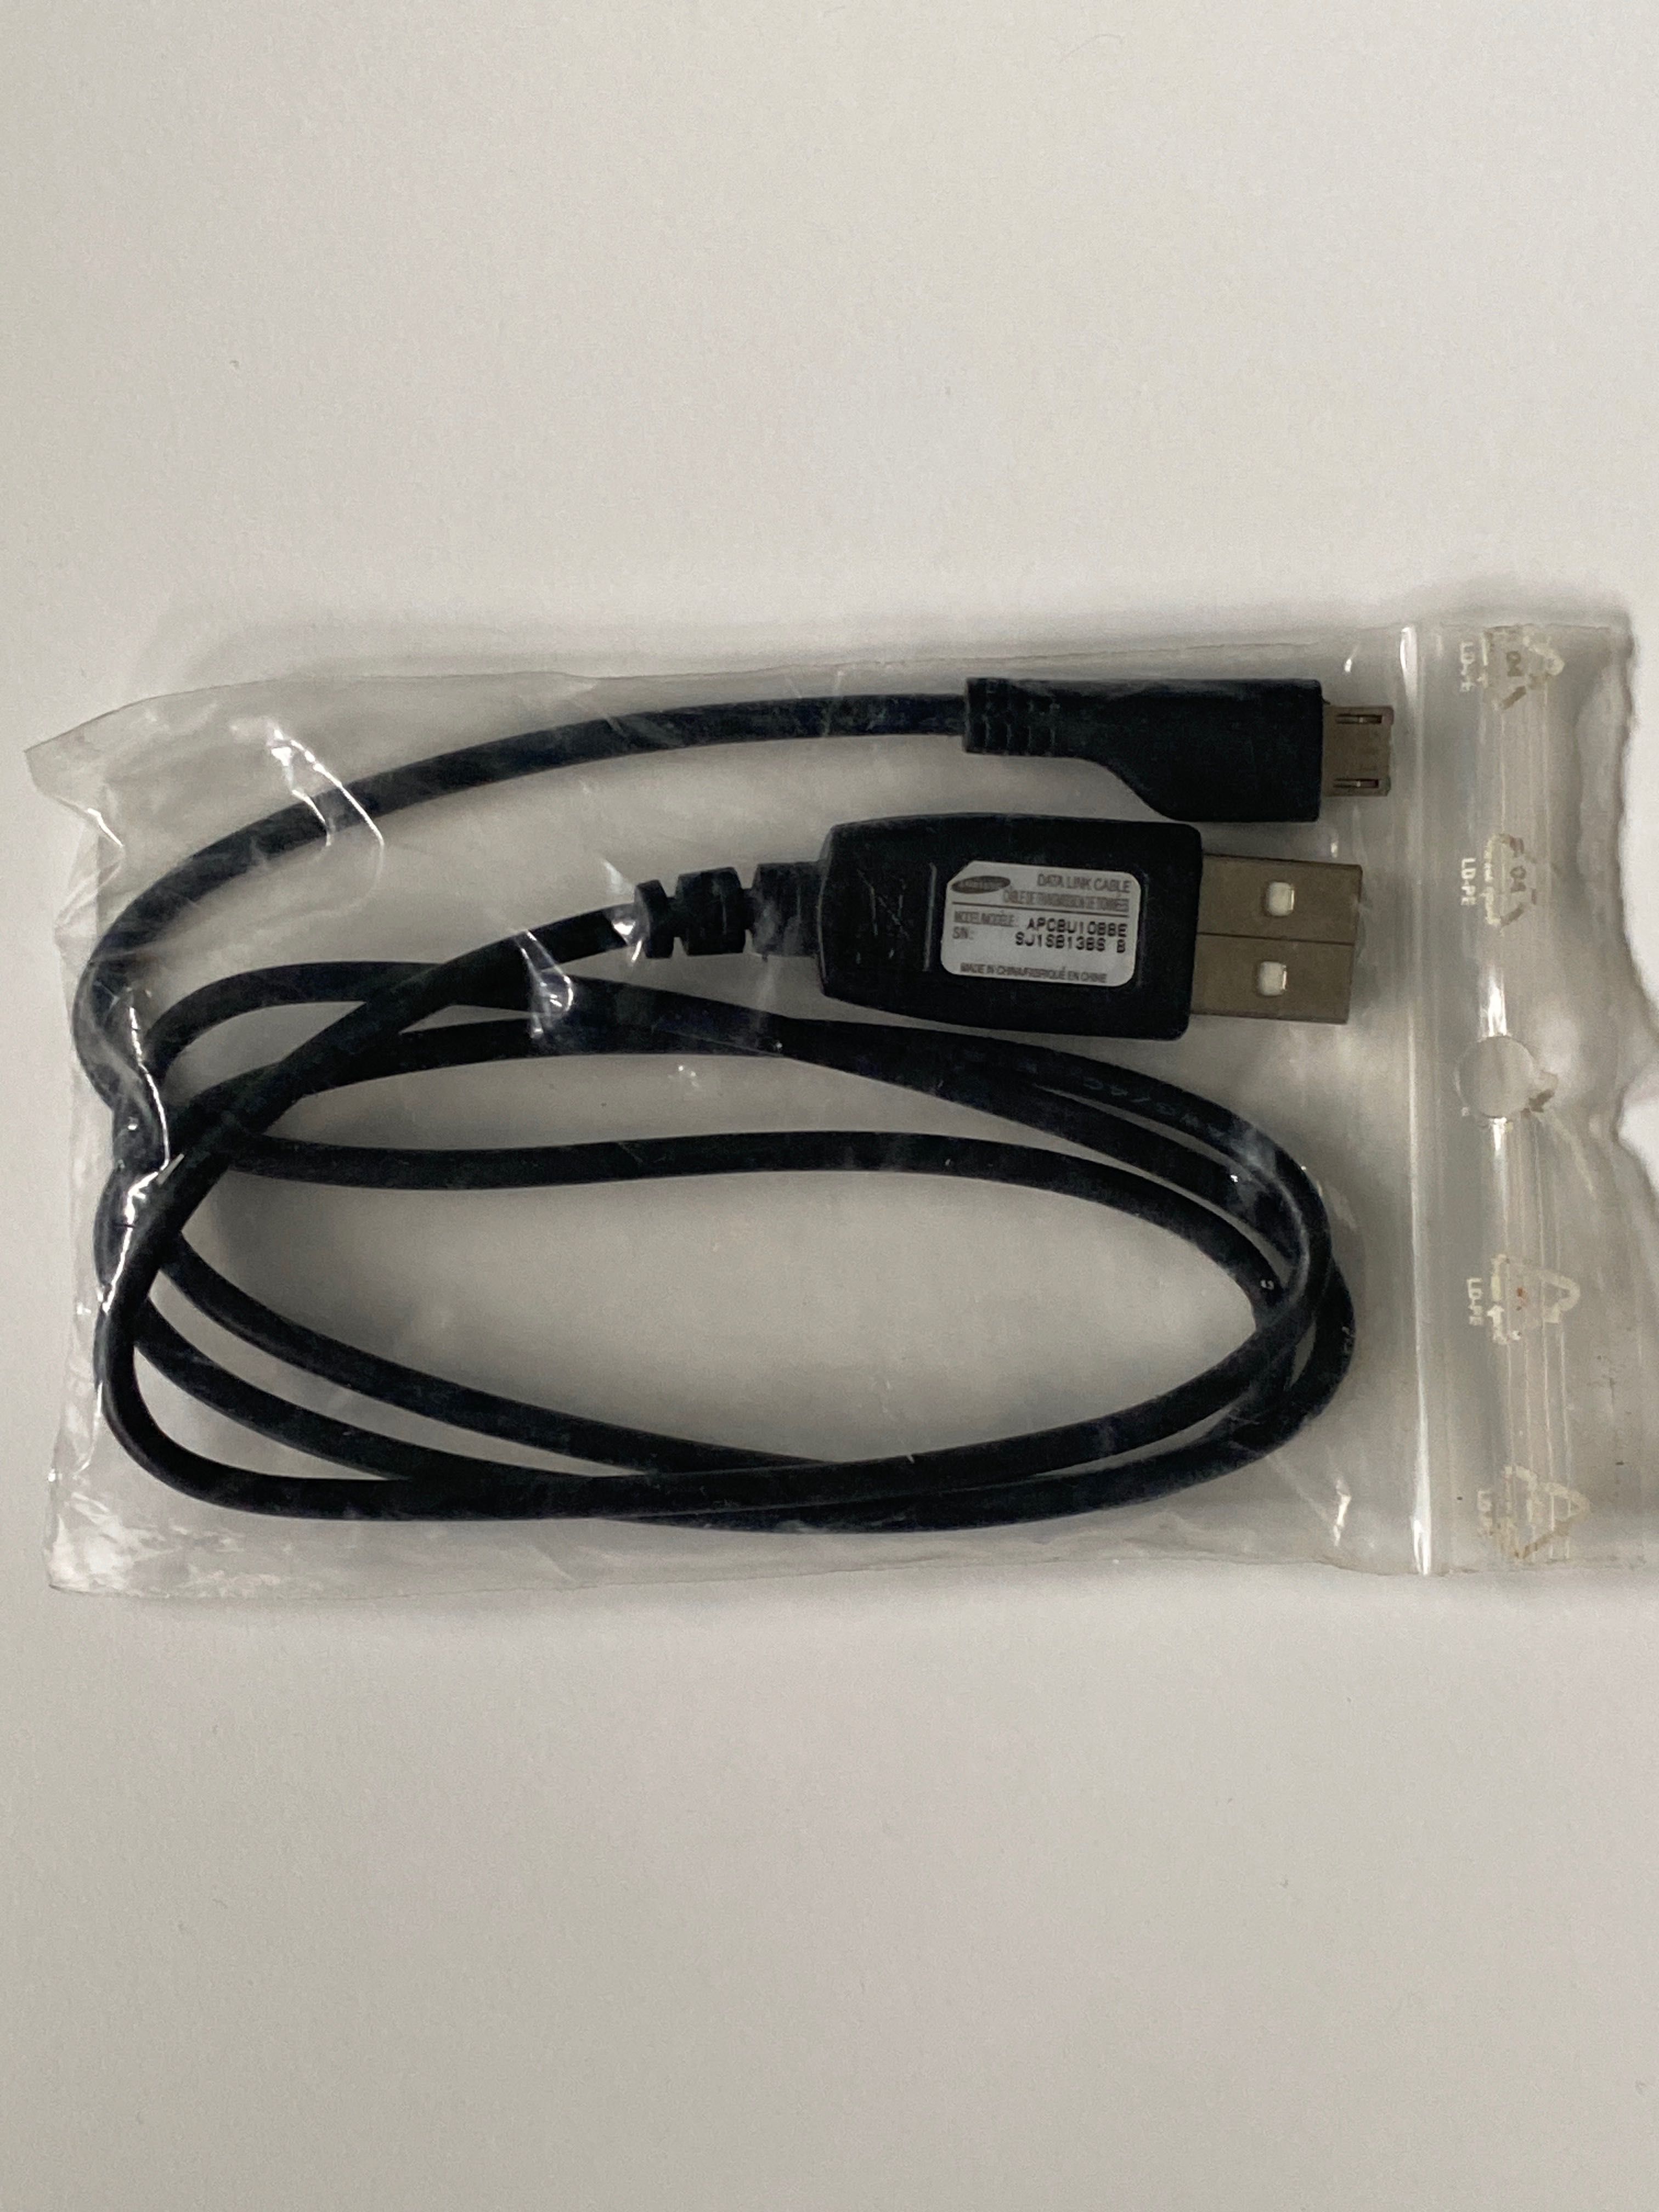 3 szt kabli USB oryginalne kable 2x micro USB +gratis 1x SGH-L760